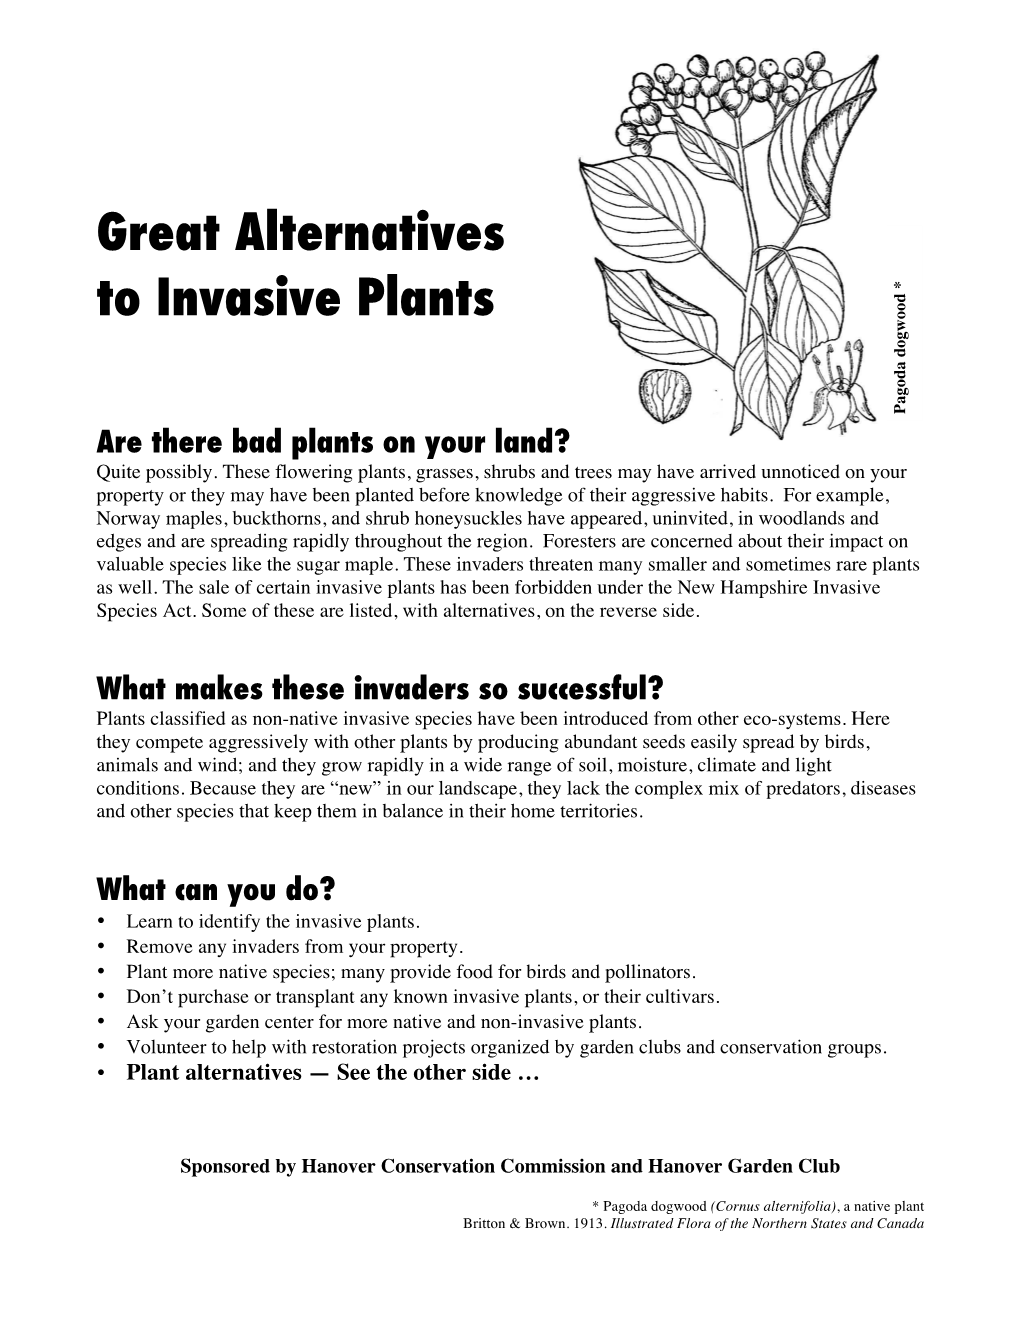 Great Alternatives to Invasive Plants